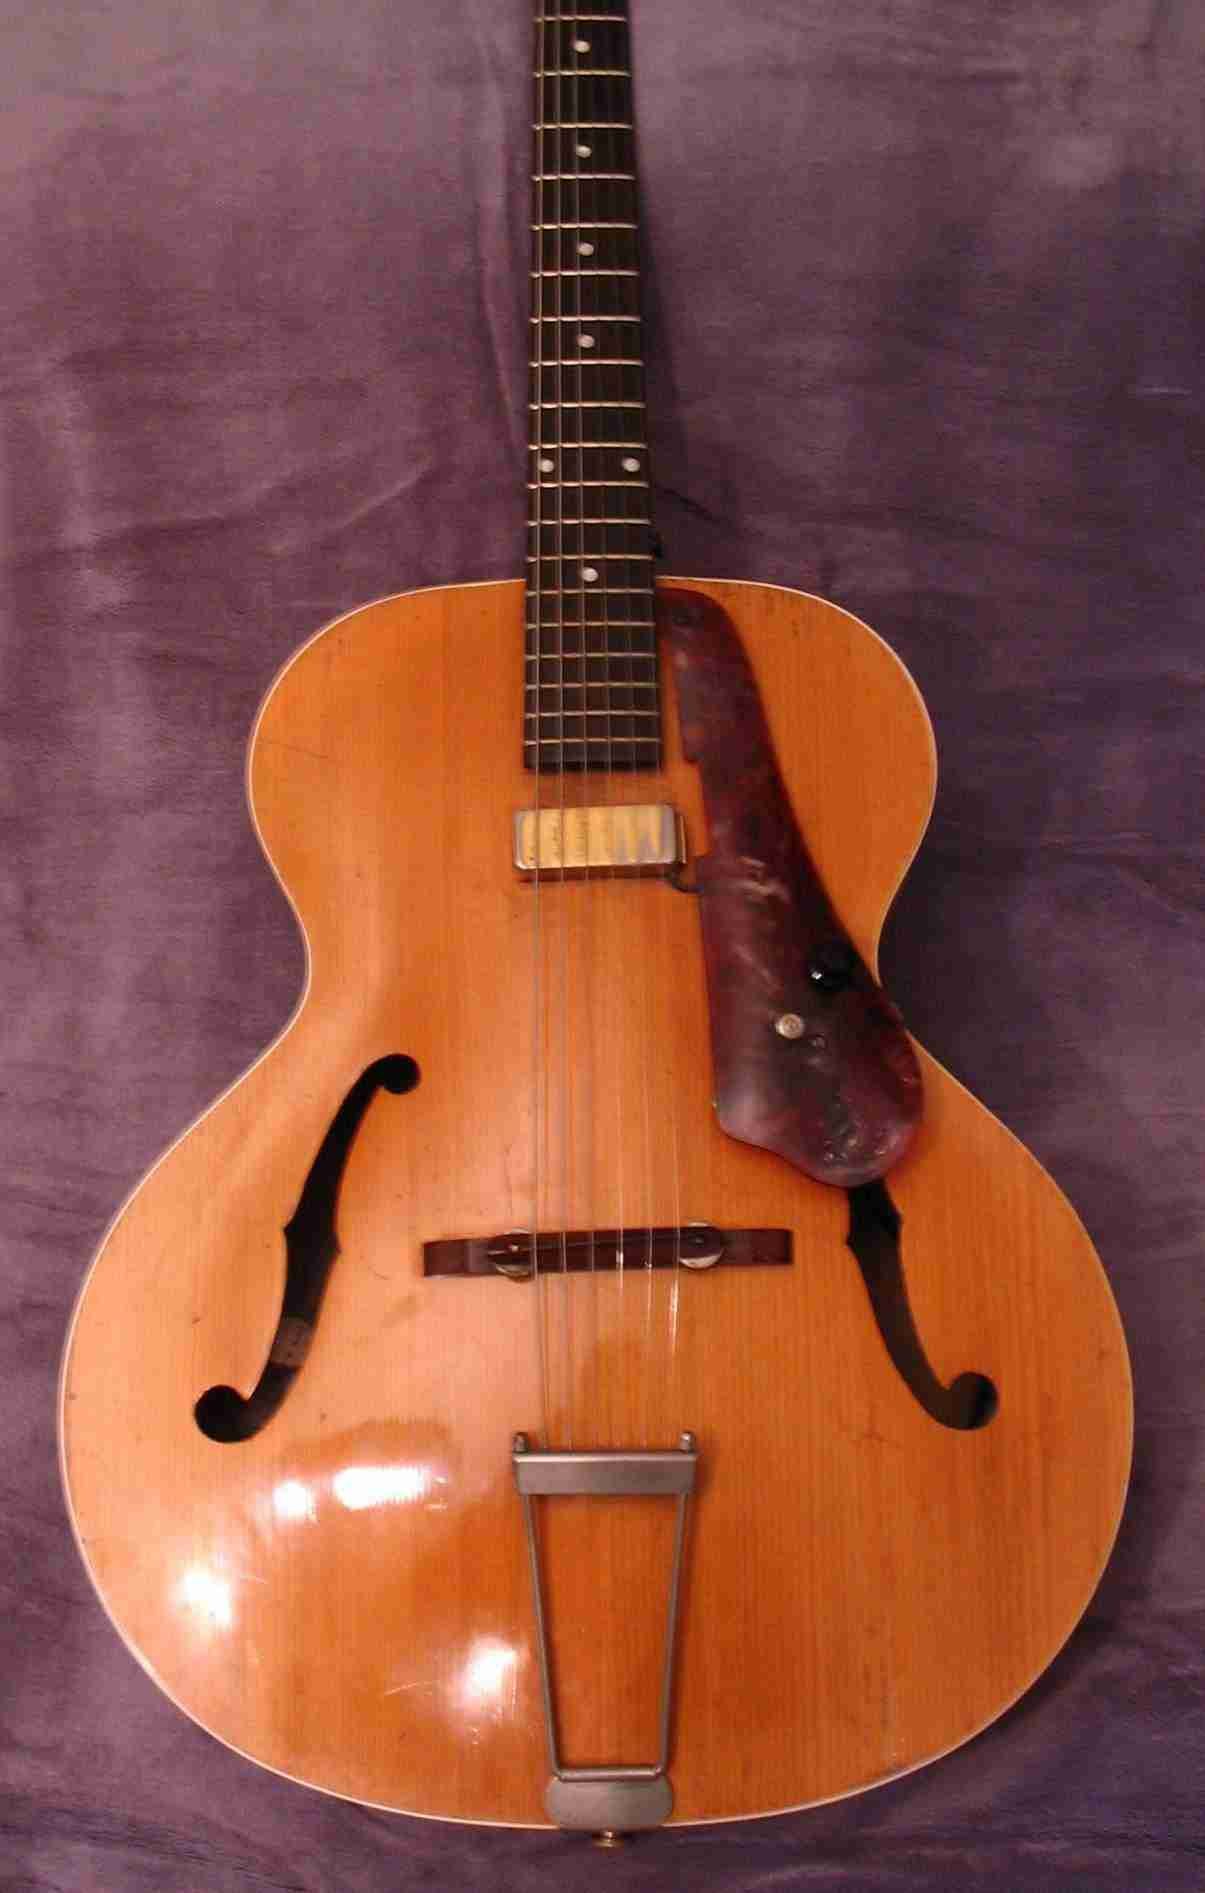 Epiphone Zenith guitare archtop de 1938